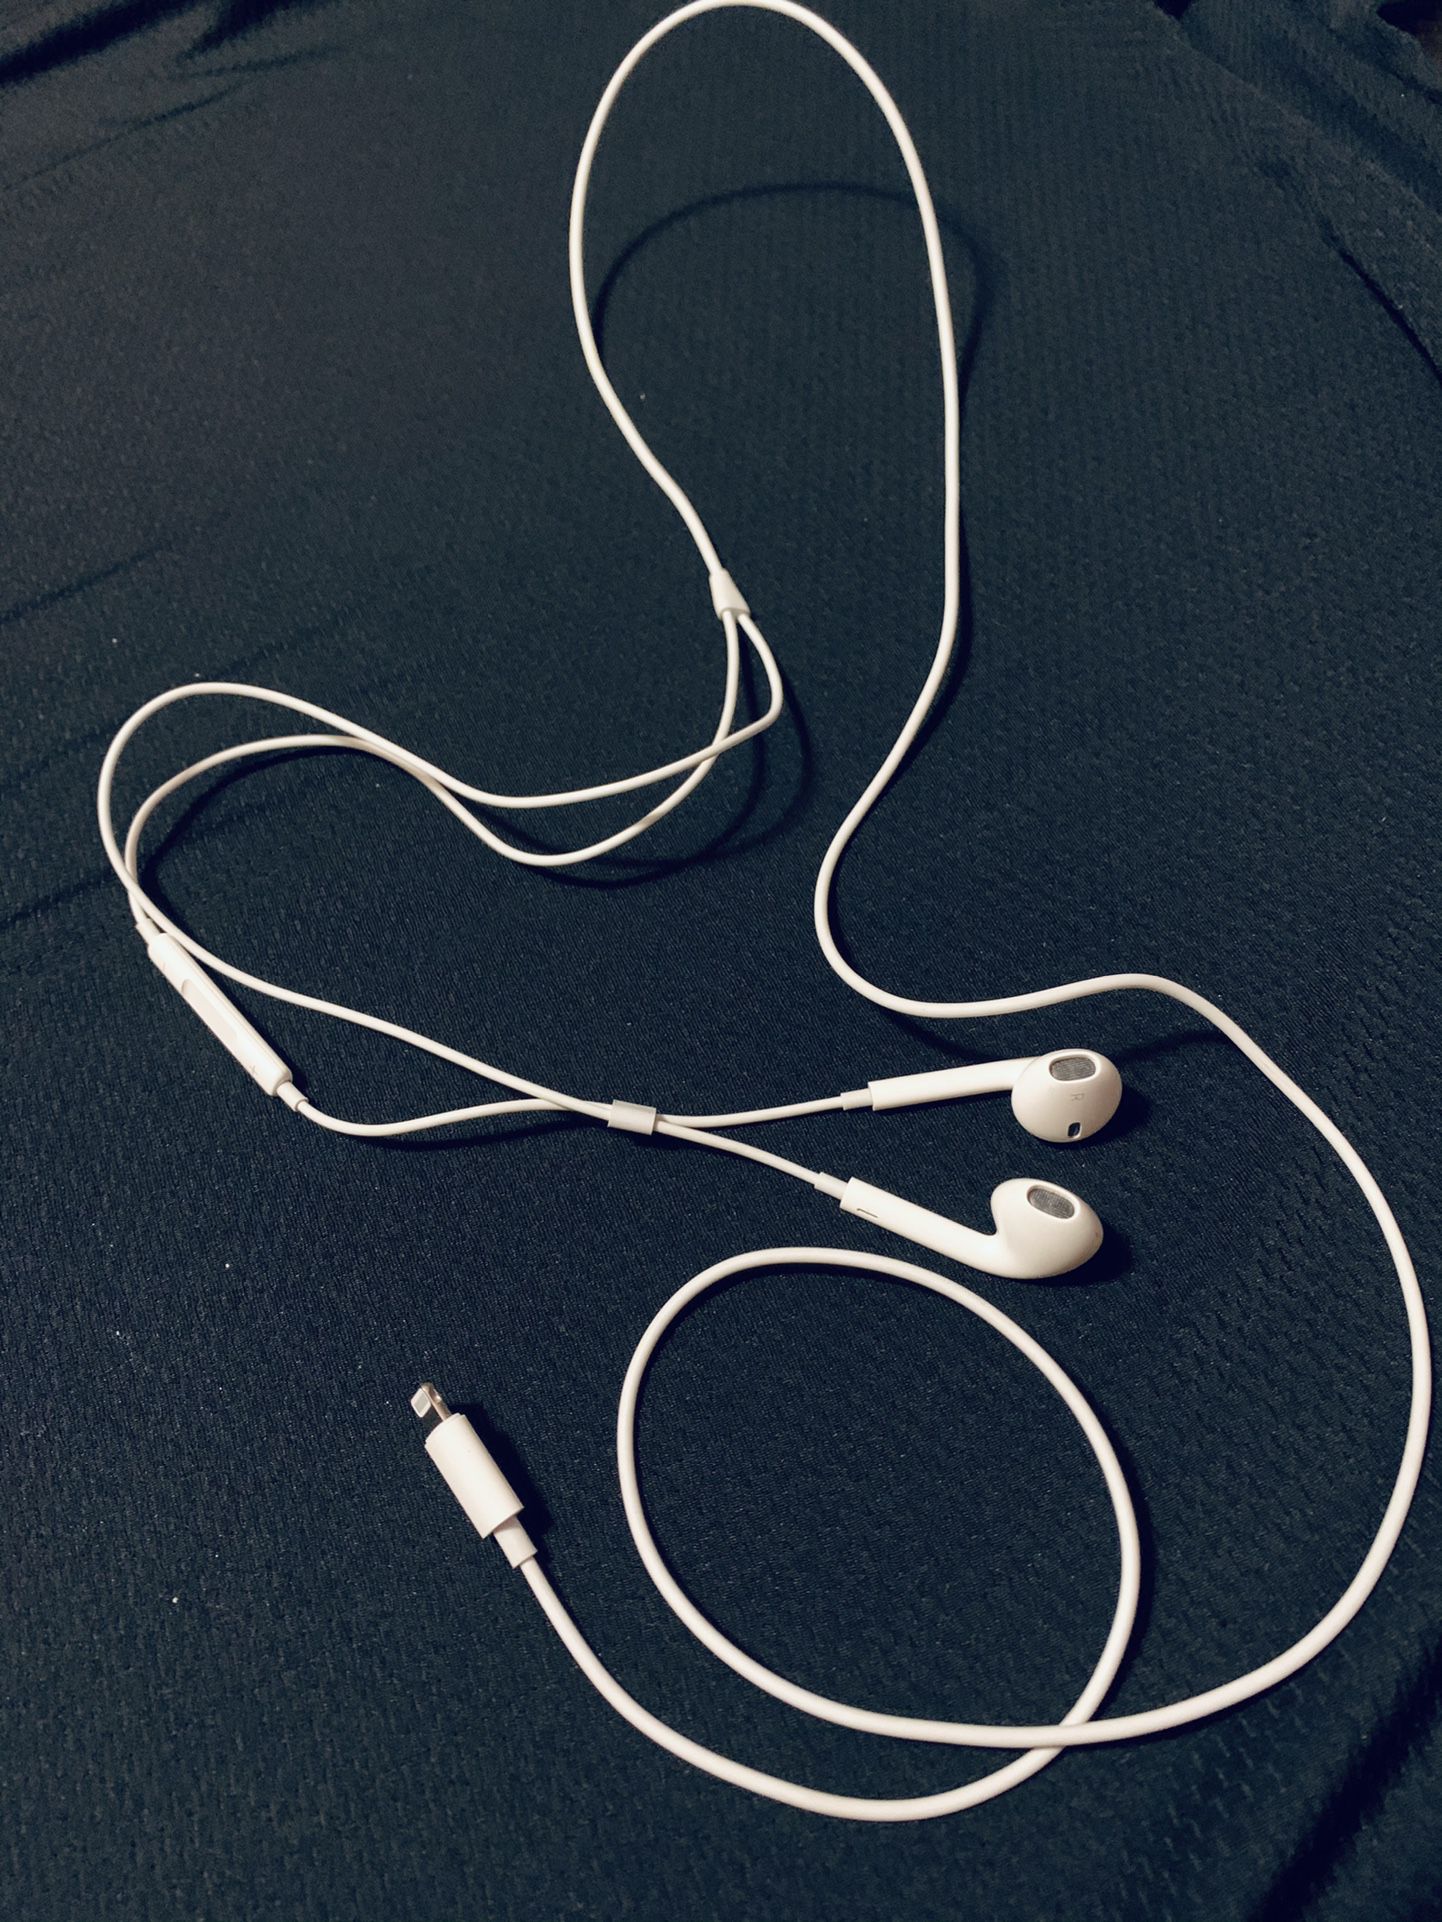 Apple Earbuds Headphones - White